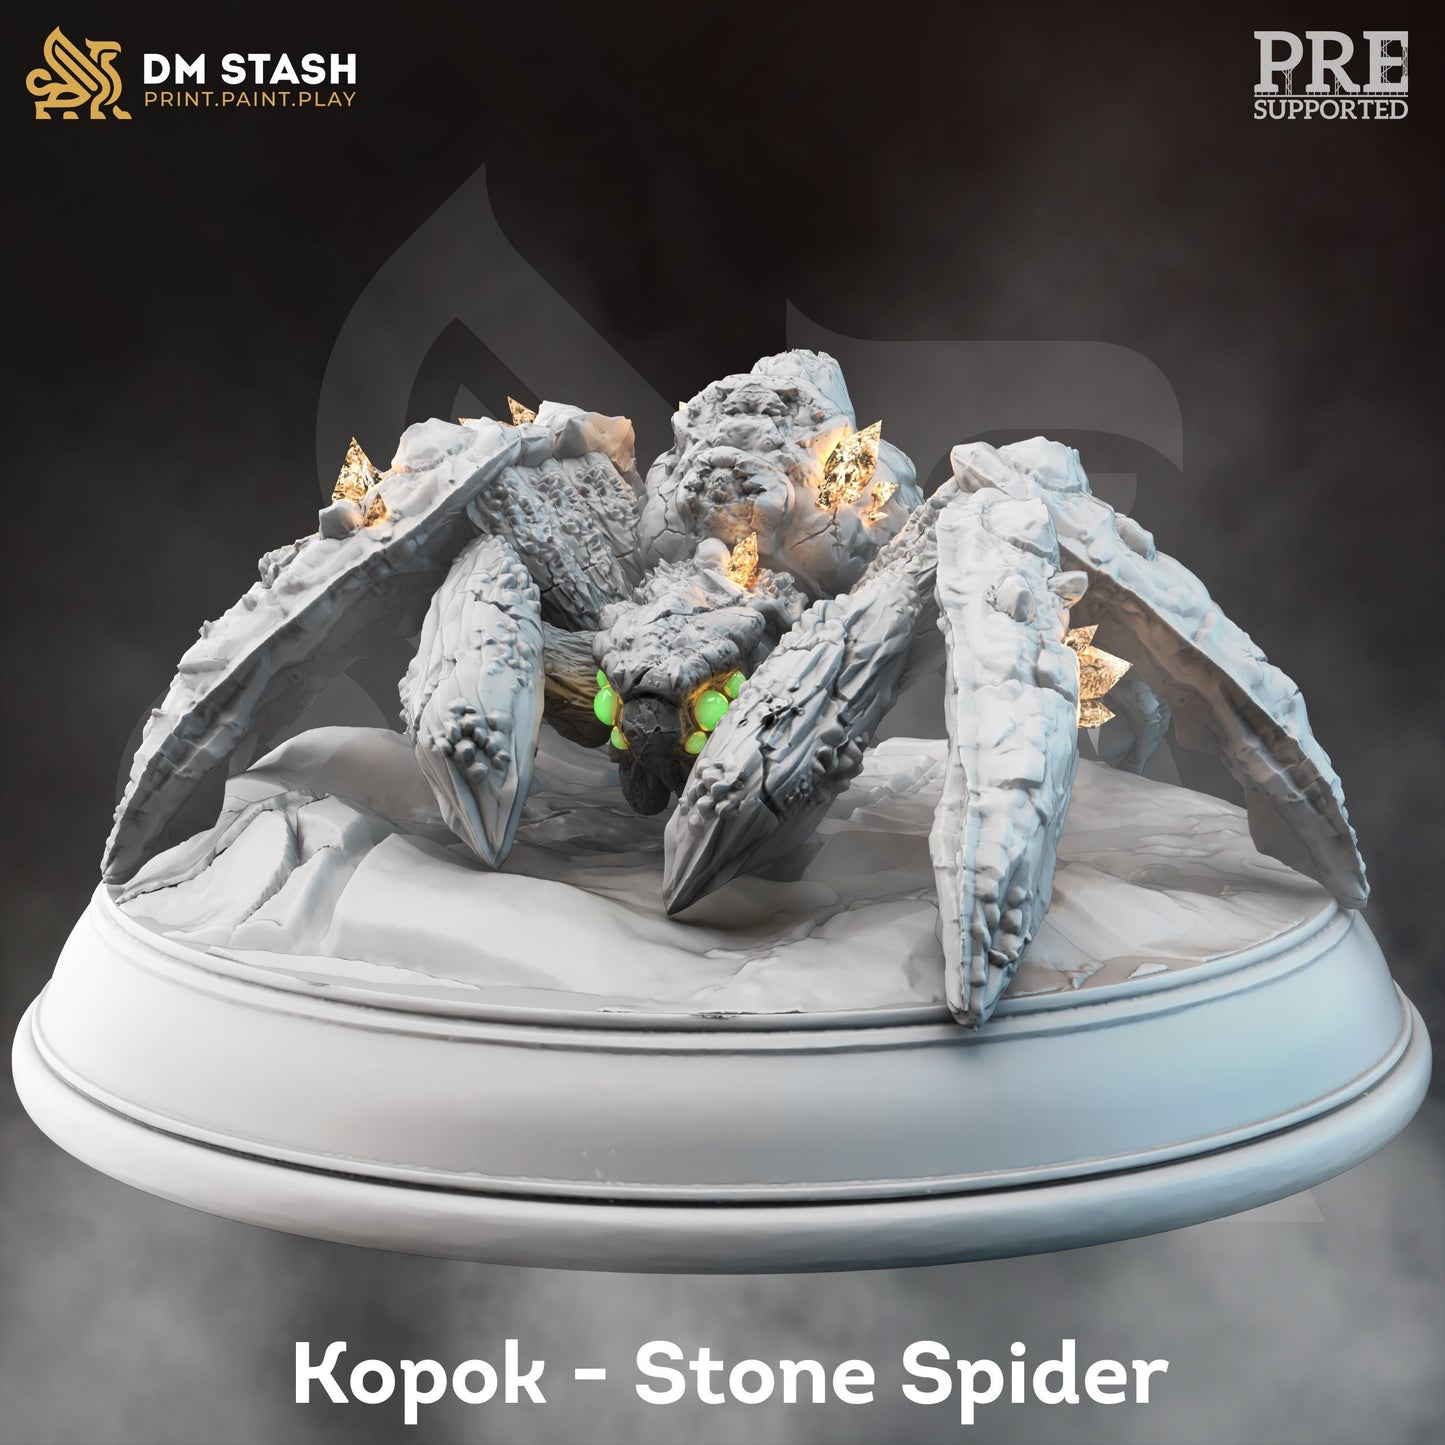 Kopok - Stone Spider by DM Stash